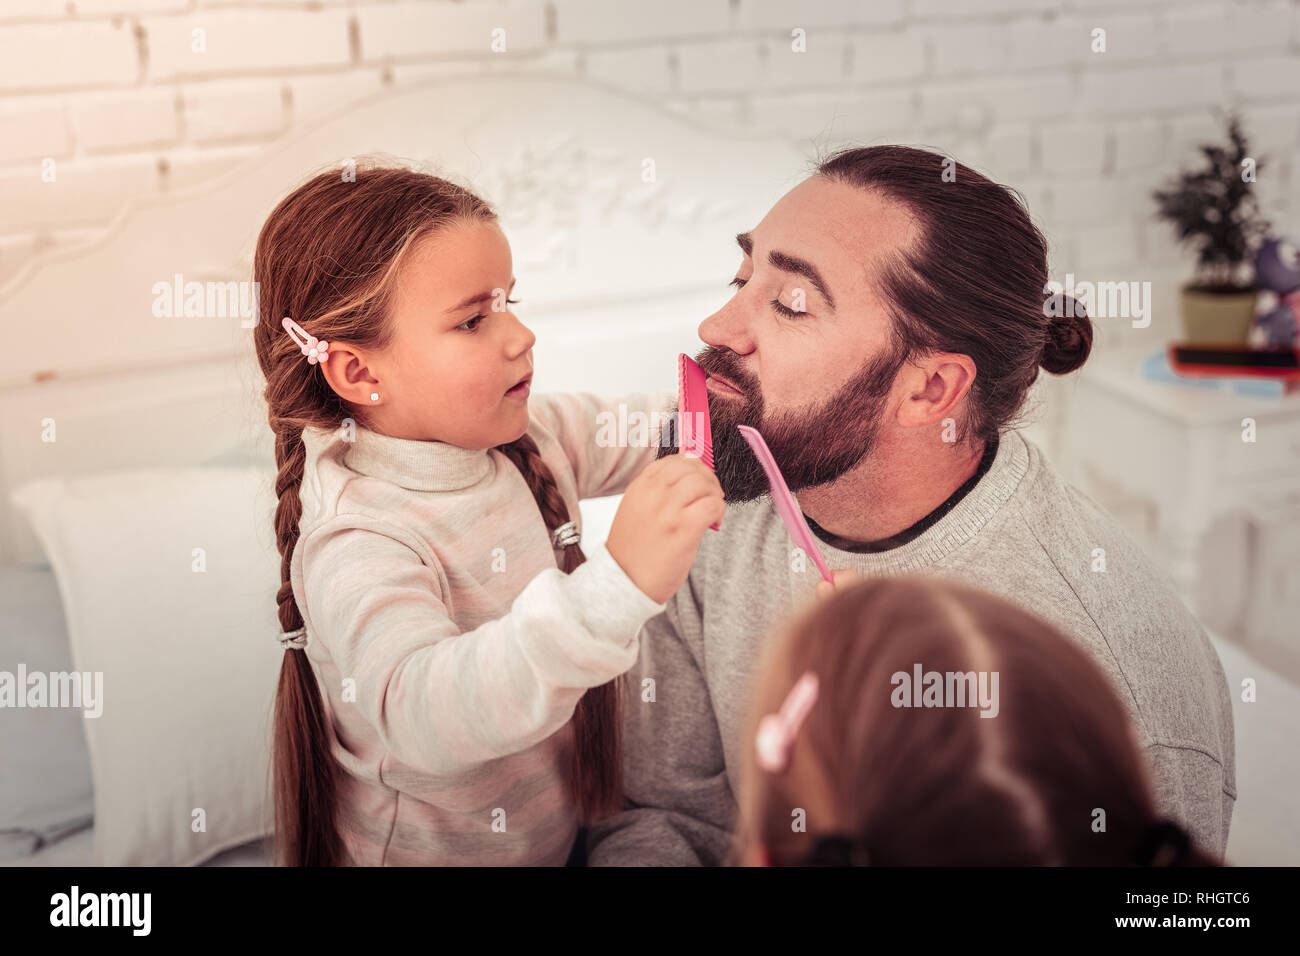 Nice cute girl combing her dads beard Stock Photo